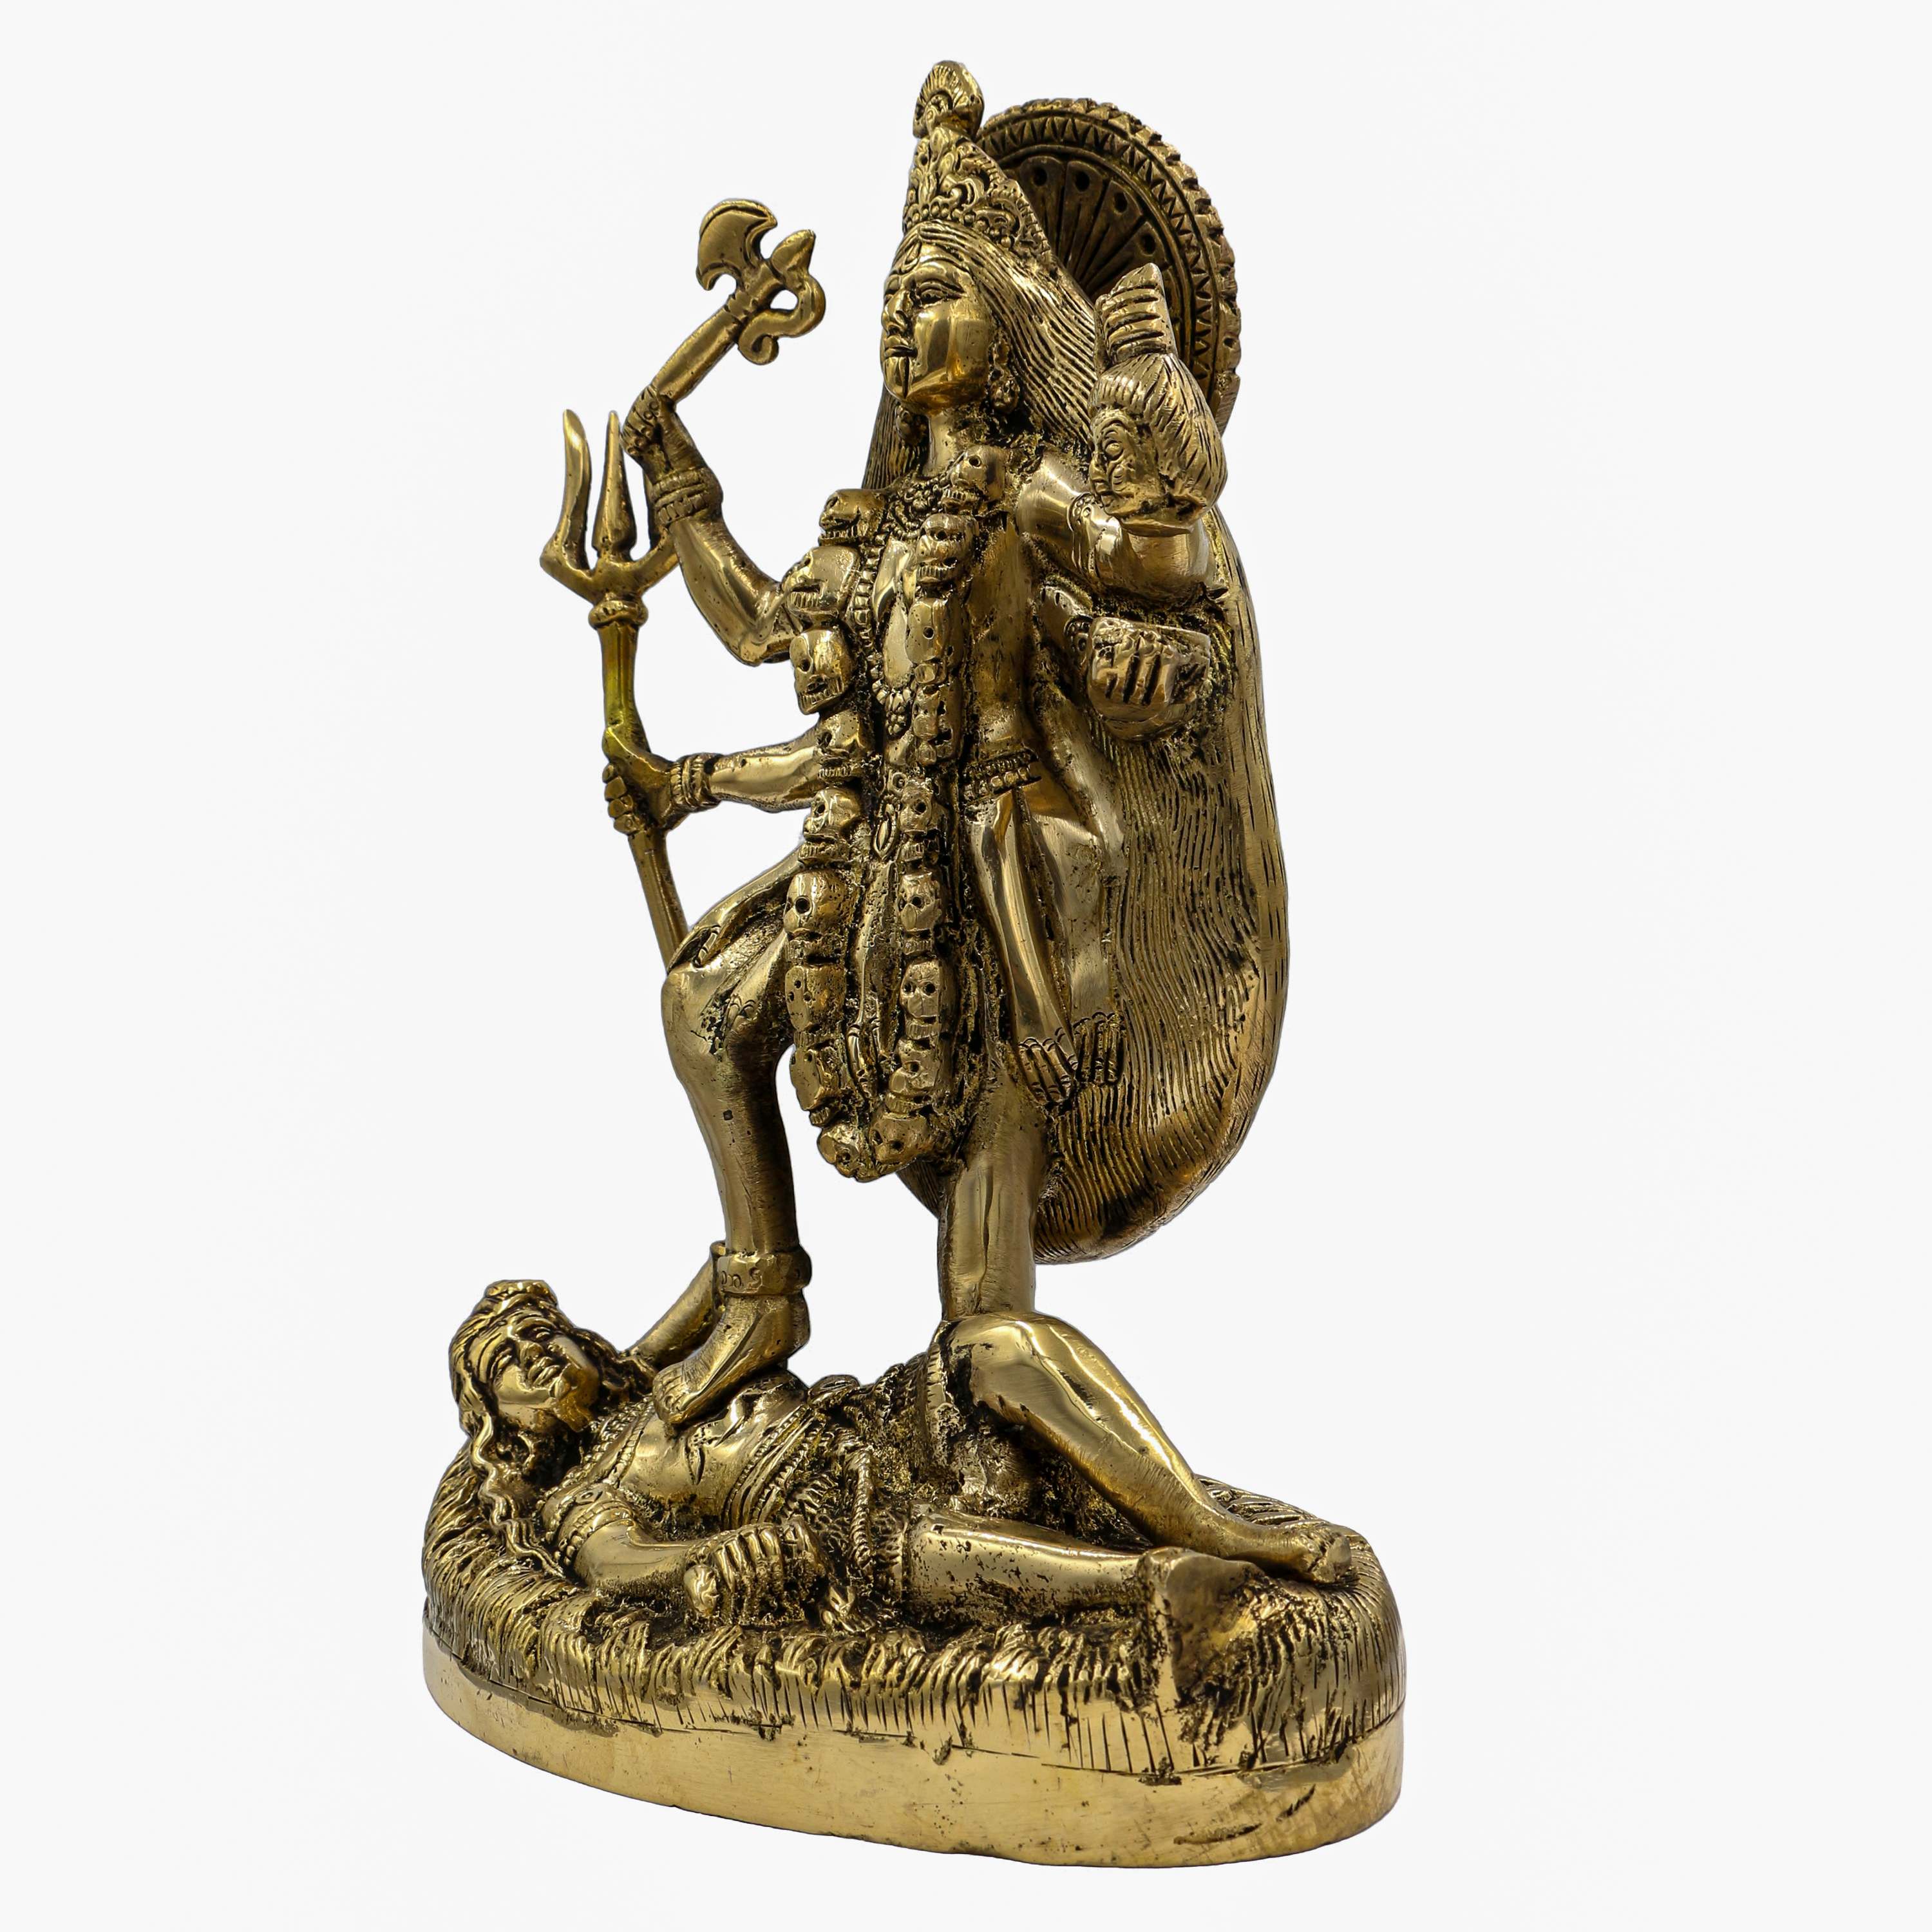 Nepali Statue Of Kali, Standing On Shiva Or Mahadev sand Casting